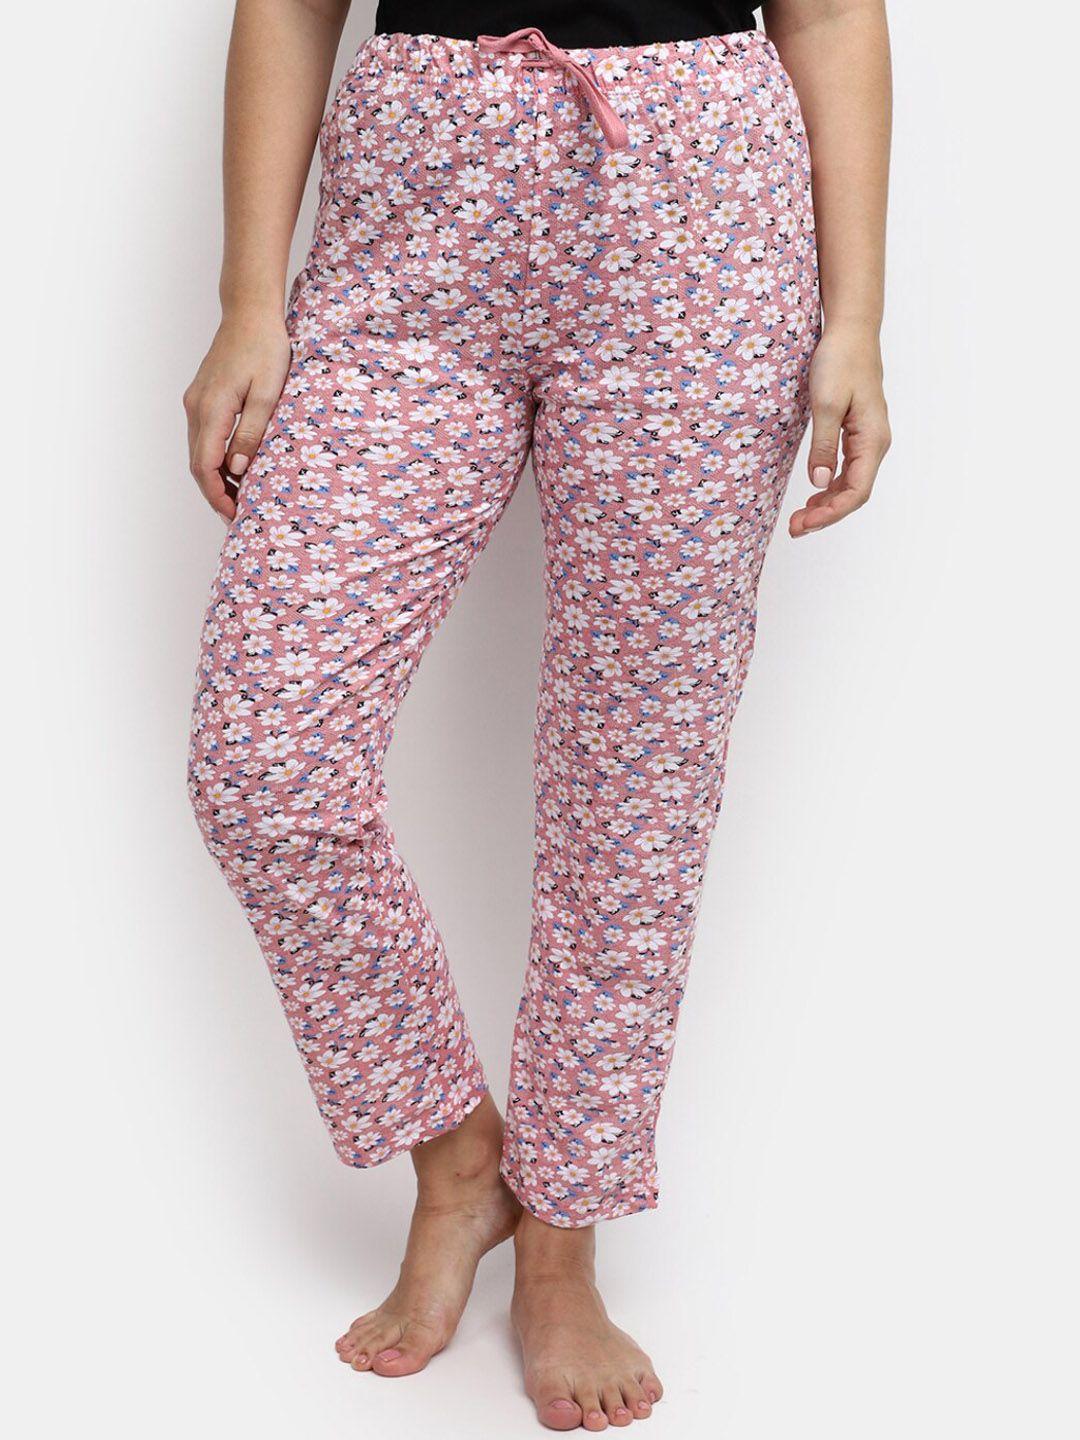 v-mart women floral printed mid rise cotton lounge pants